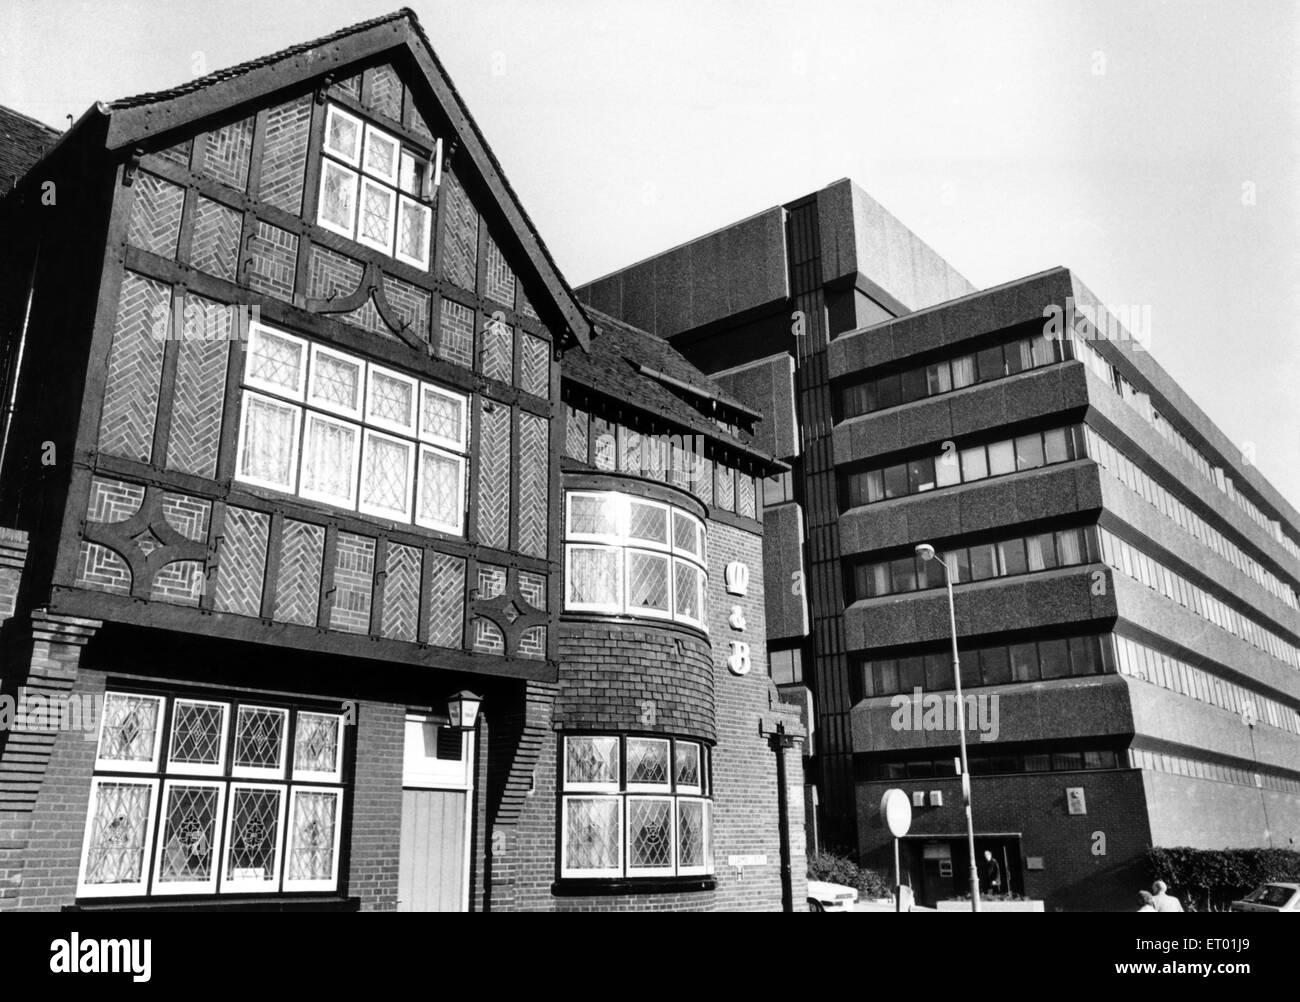 Le Cerf, Bishop Street, Coventry, West Midlands (anciennement Warwickshire) Le 31 octobre 1988. Banque D'Images